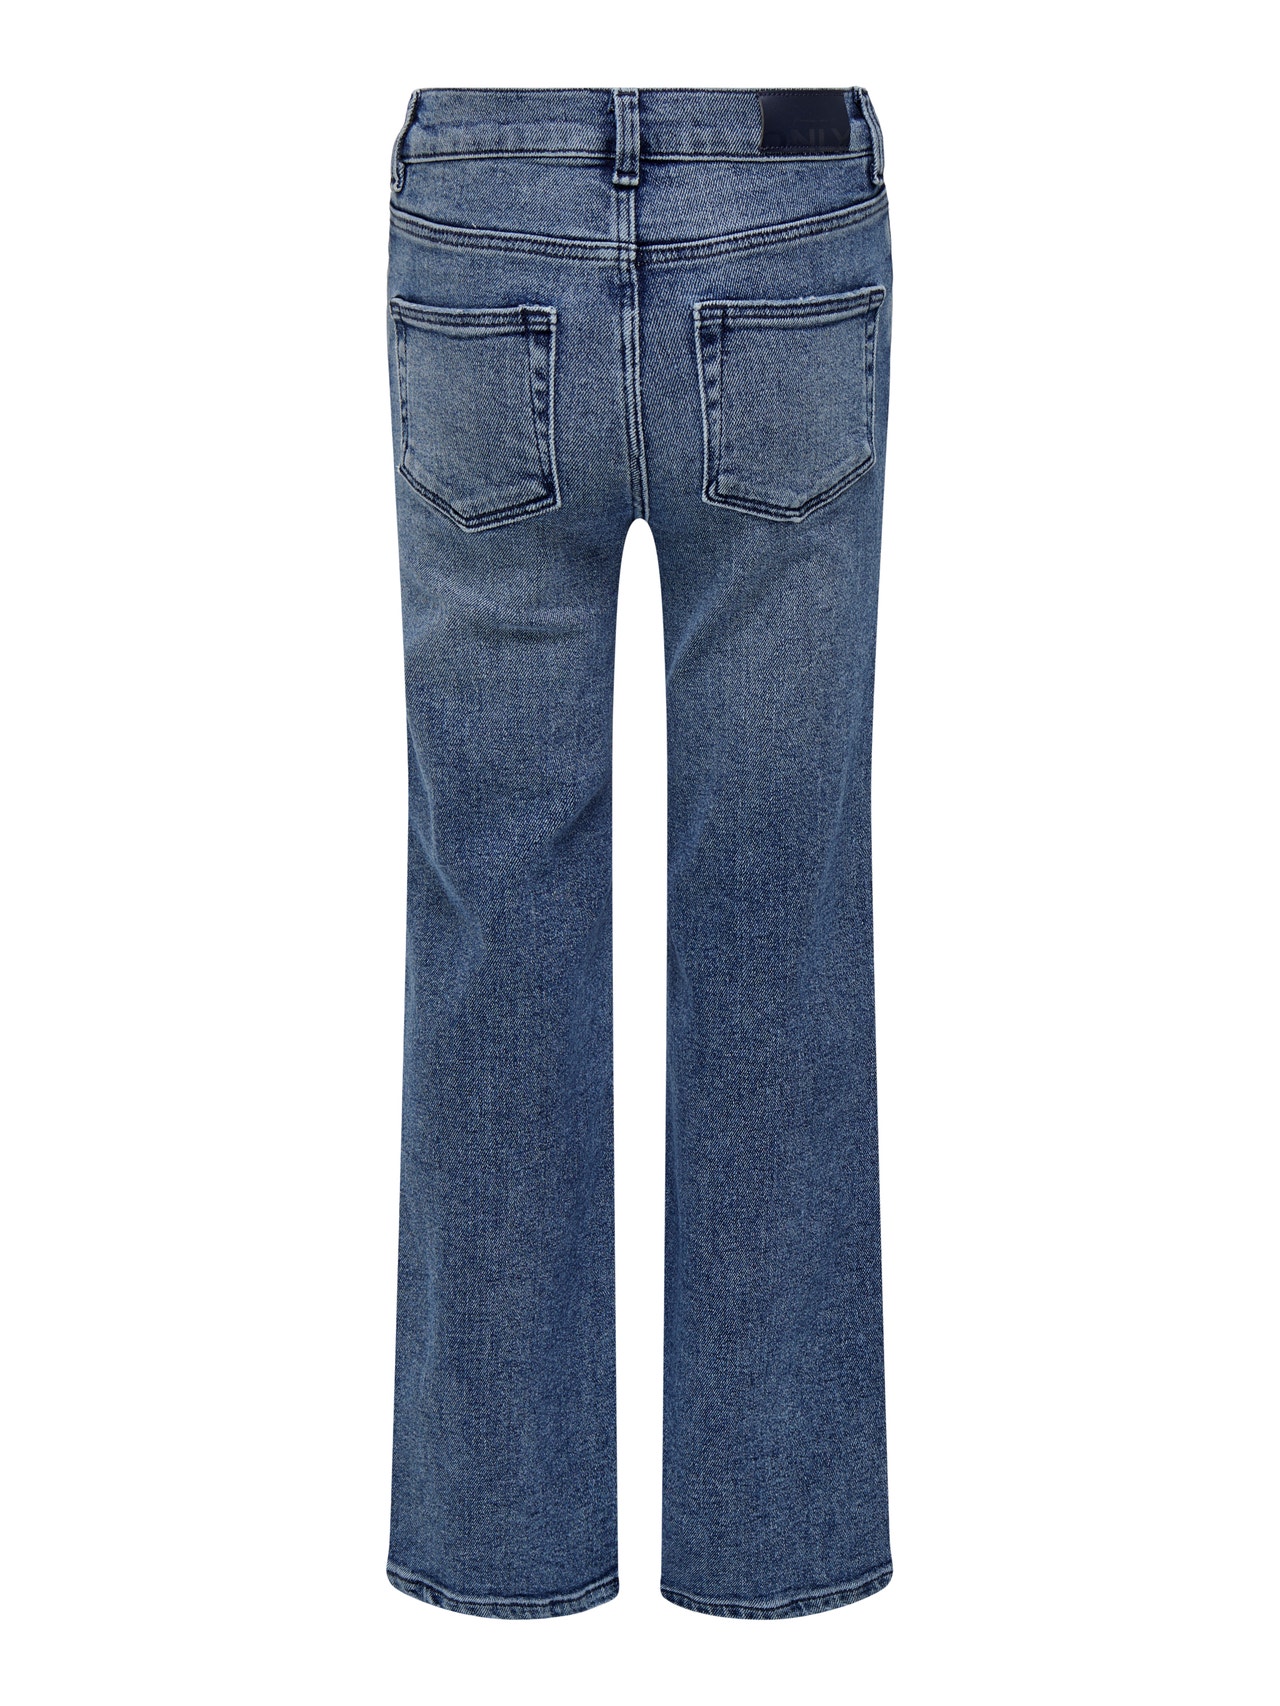 ONLY Wide Leg Fit Jeans -Medium Blue Denim - 15300735